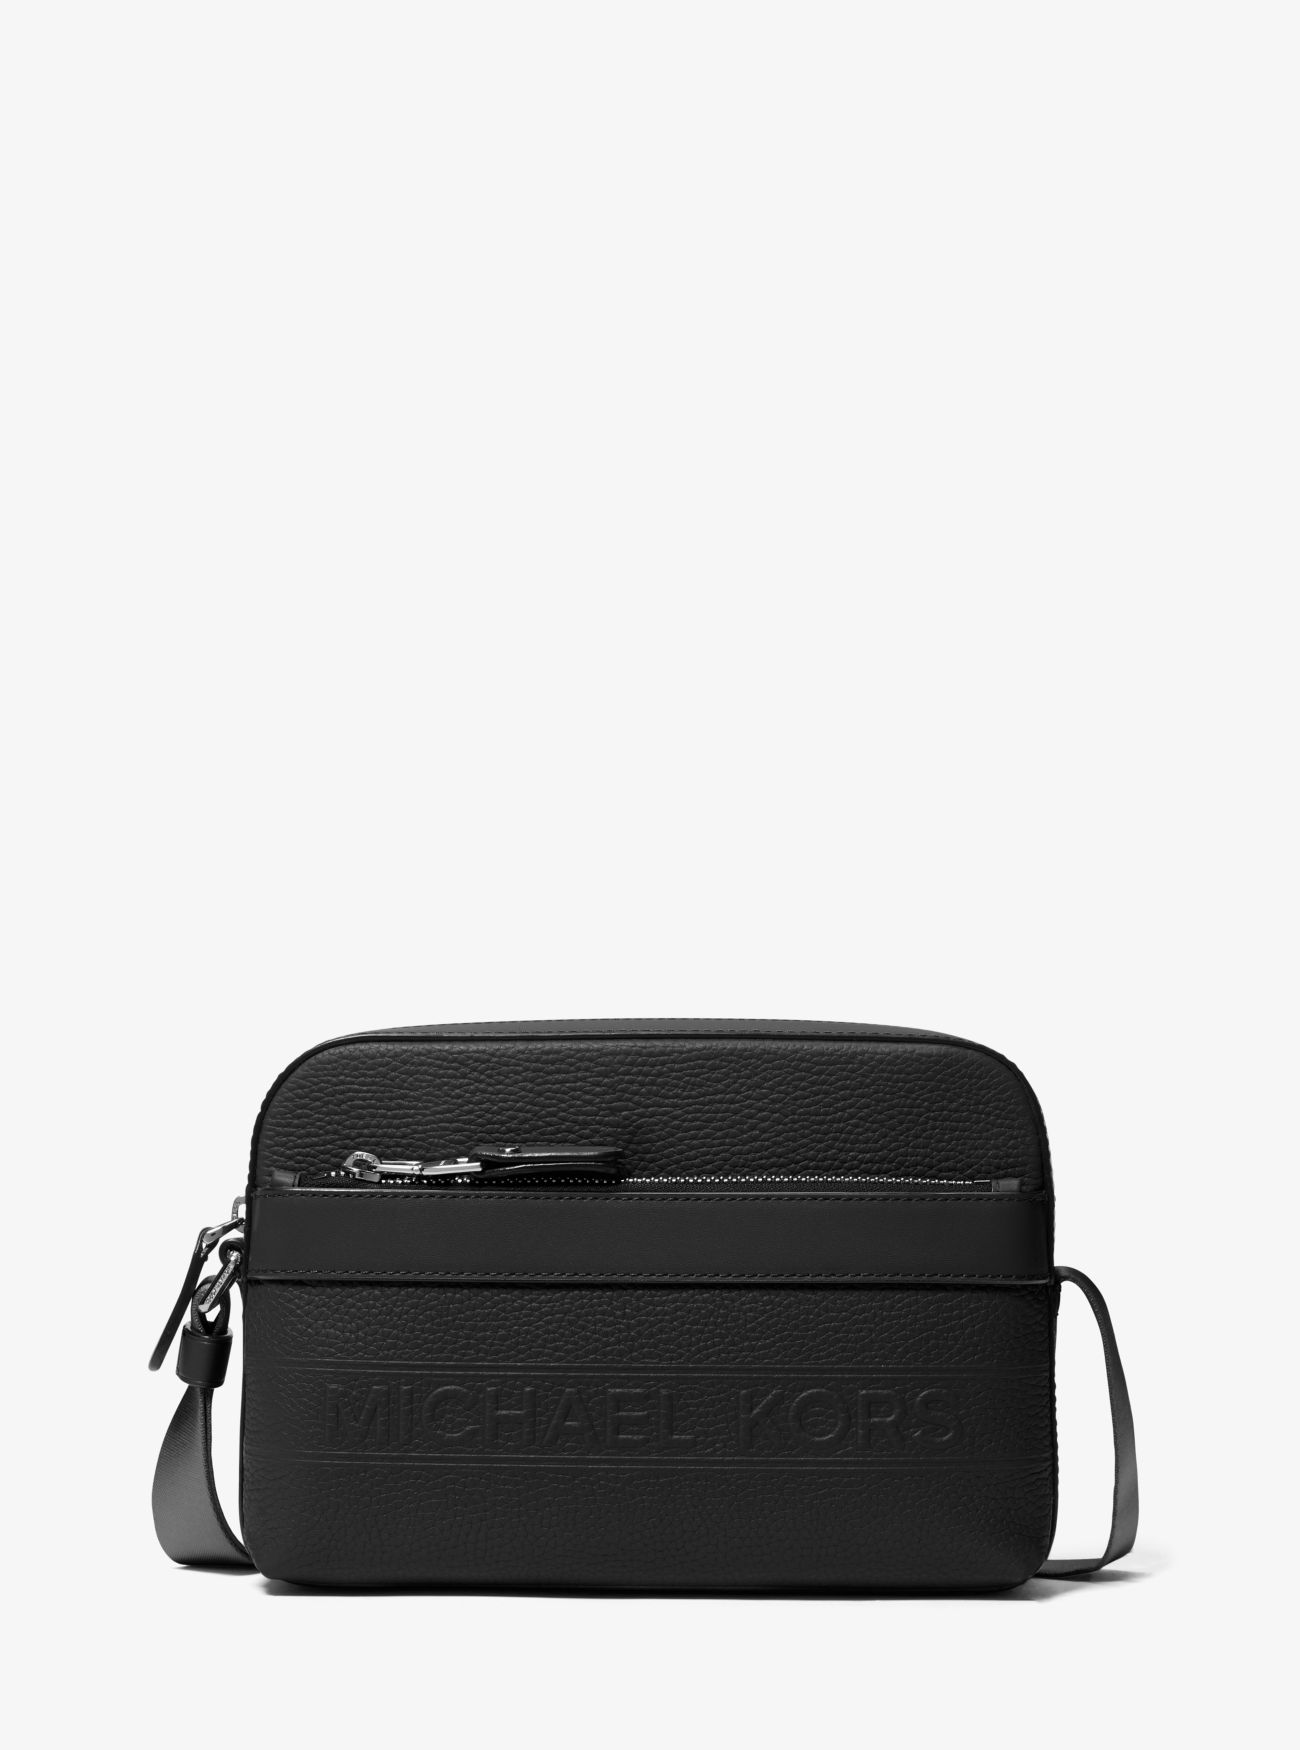 MK Hudson Pebbled Leather Utility Crossbody Bag - Black - Michael Kors